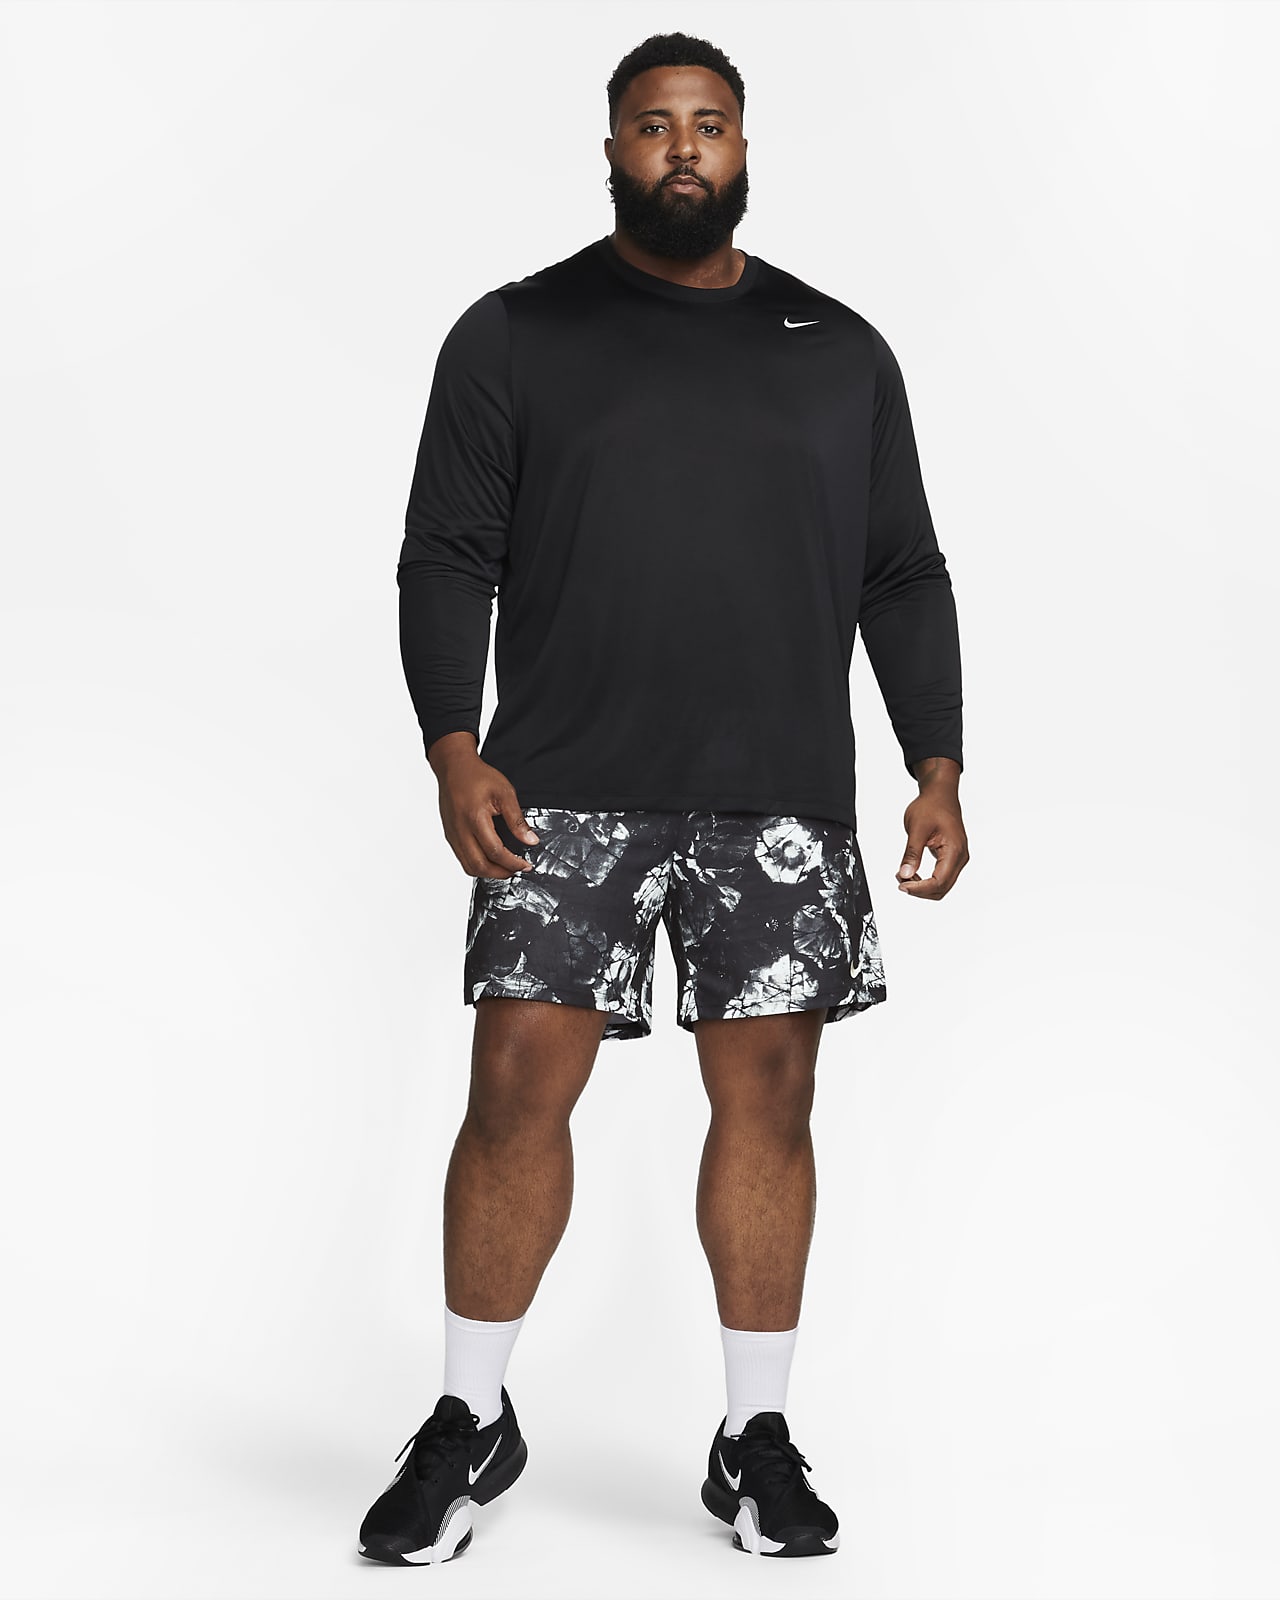 Los mejores shorts de running Nike para hombre. Nike XL